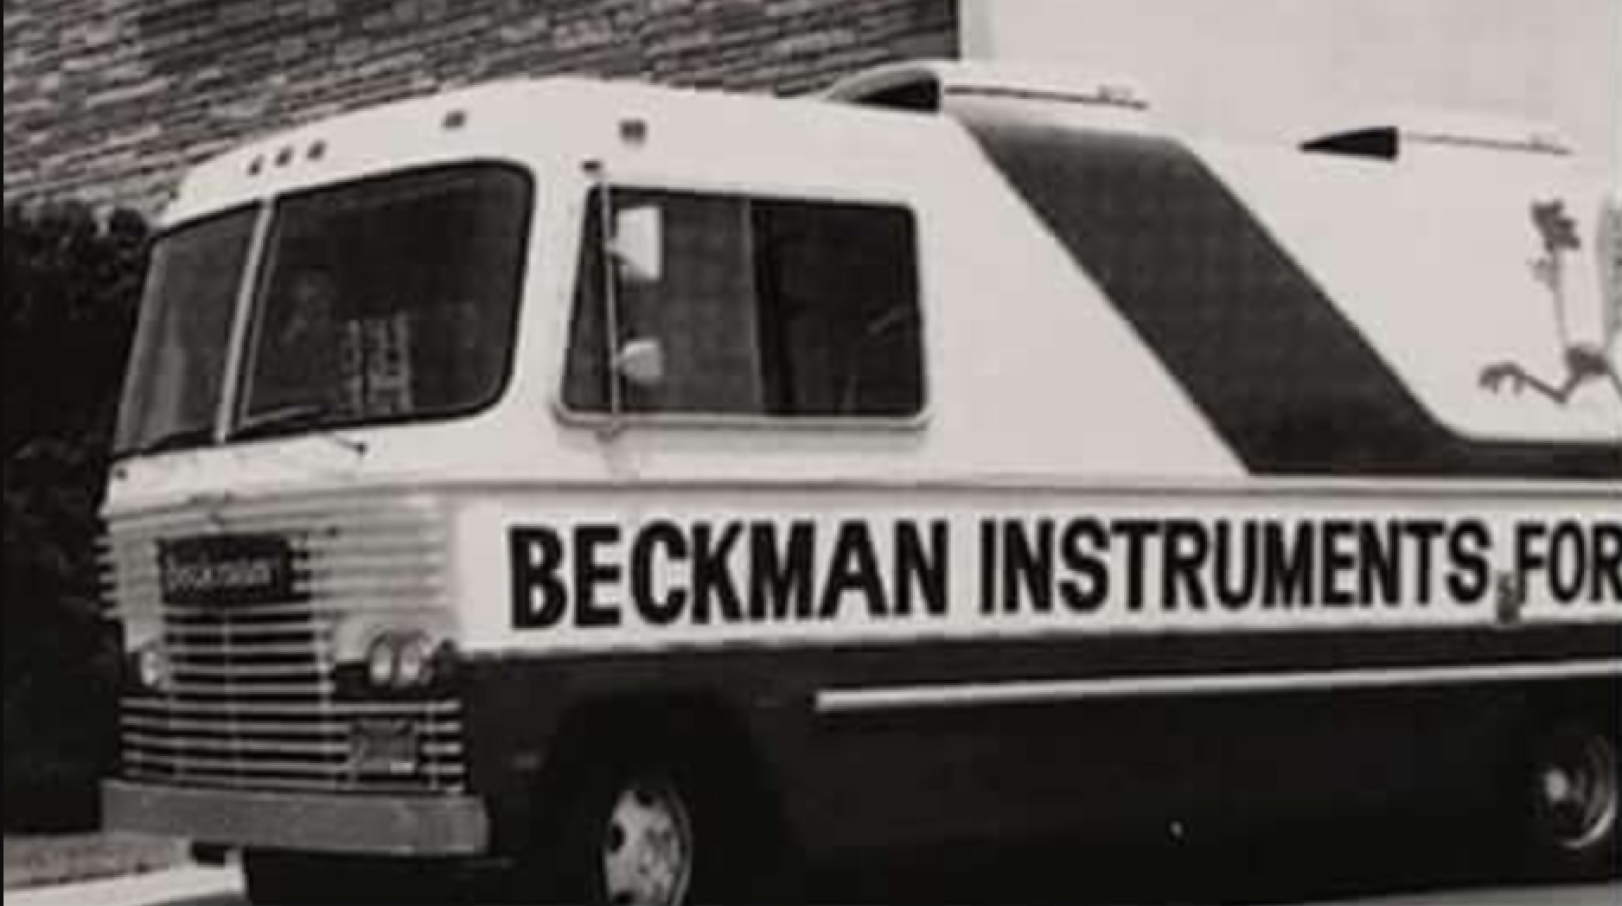 Beckman Instruments